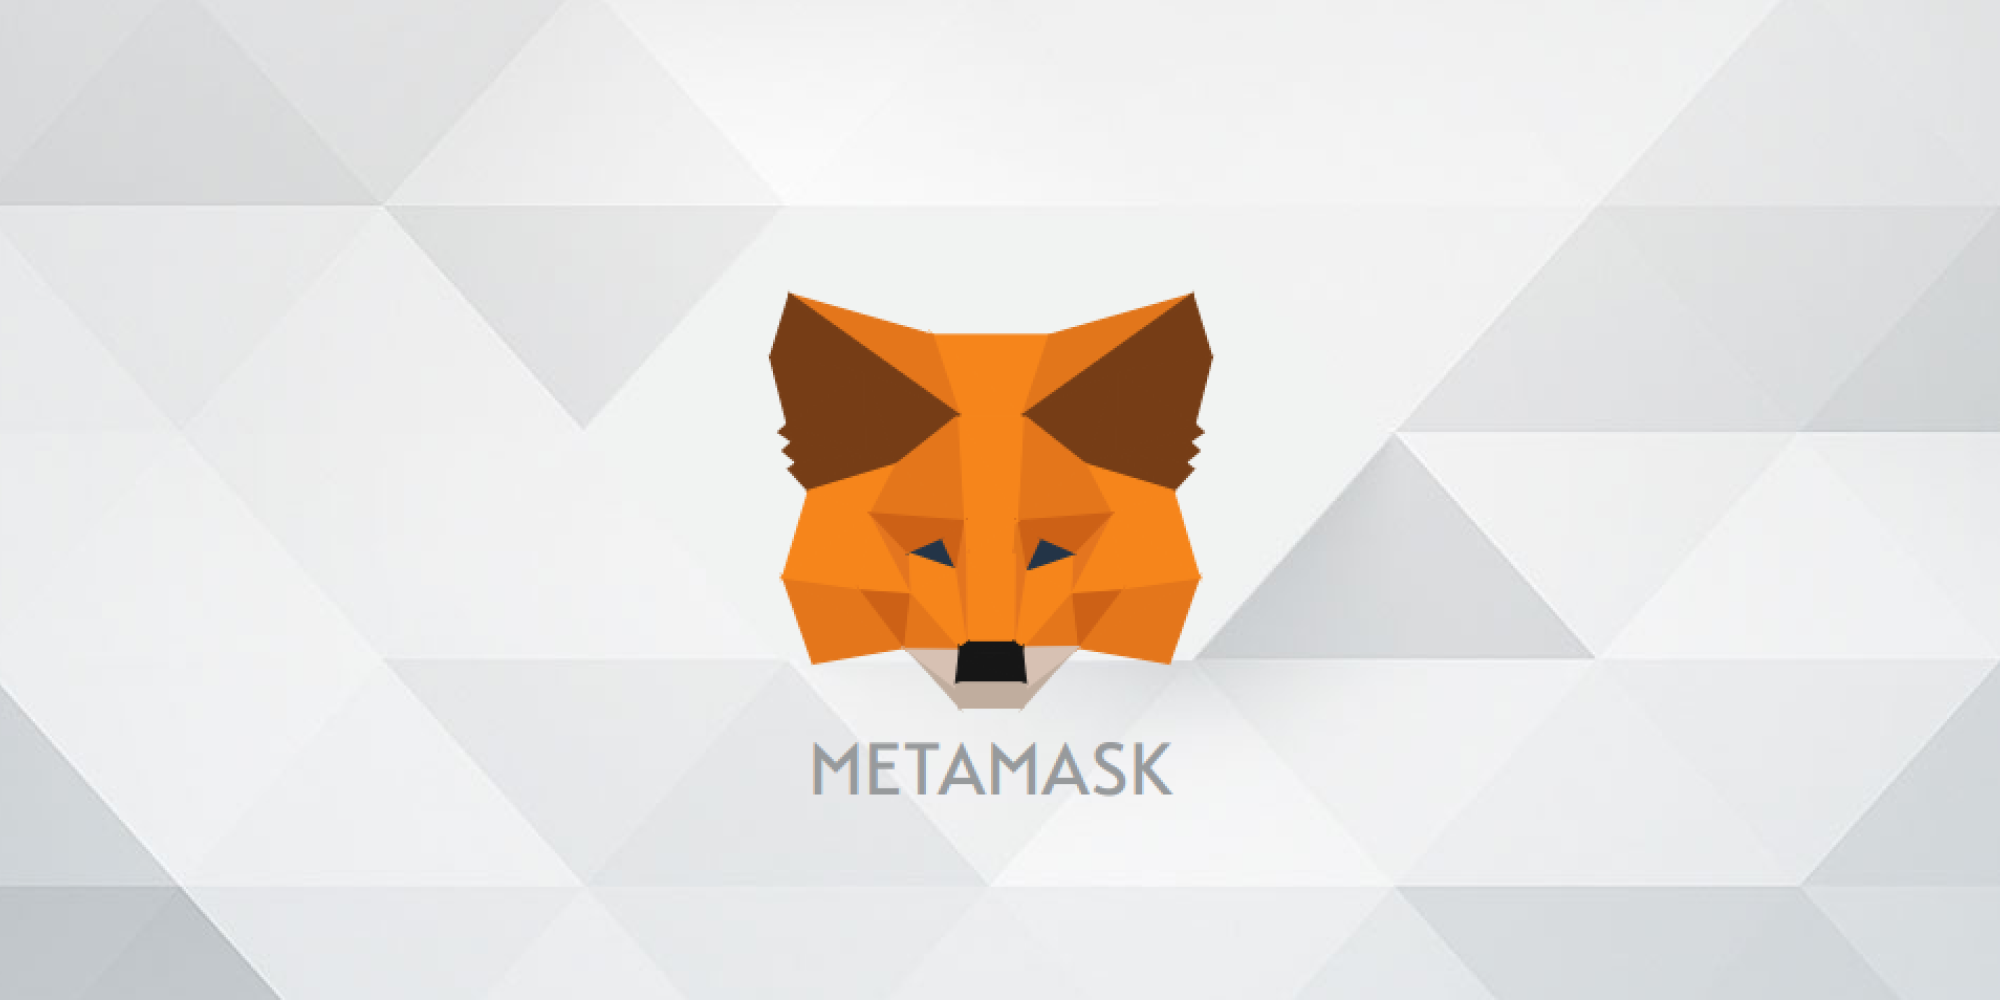 metamask disappeared